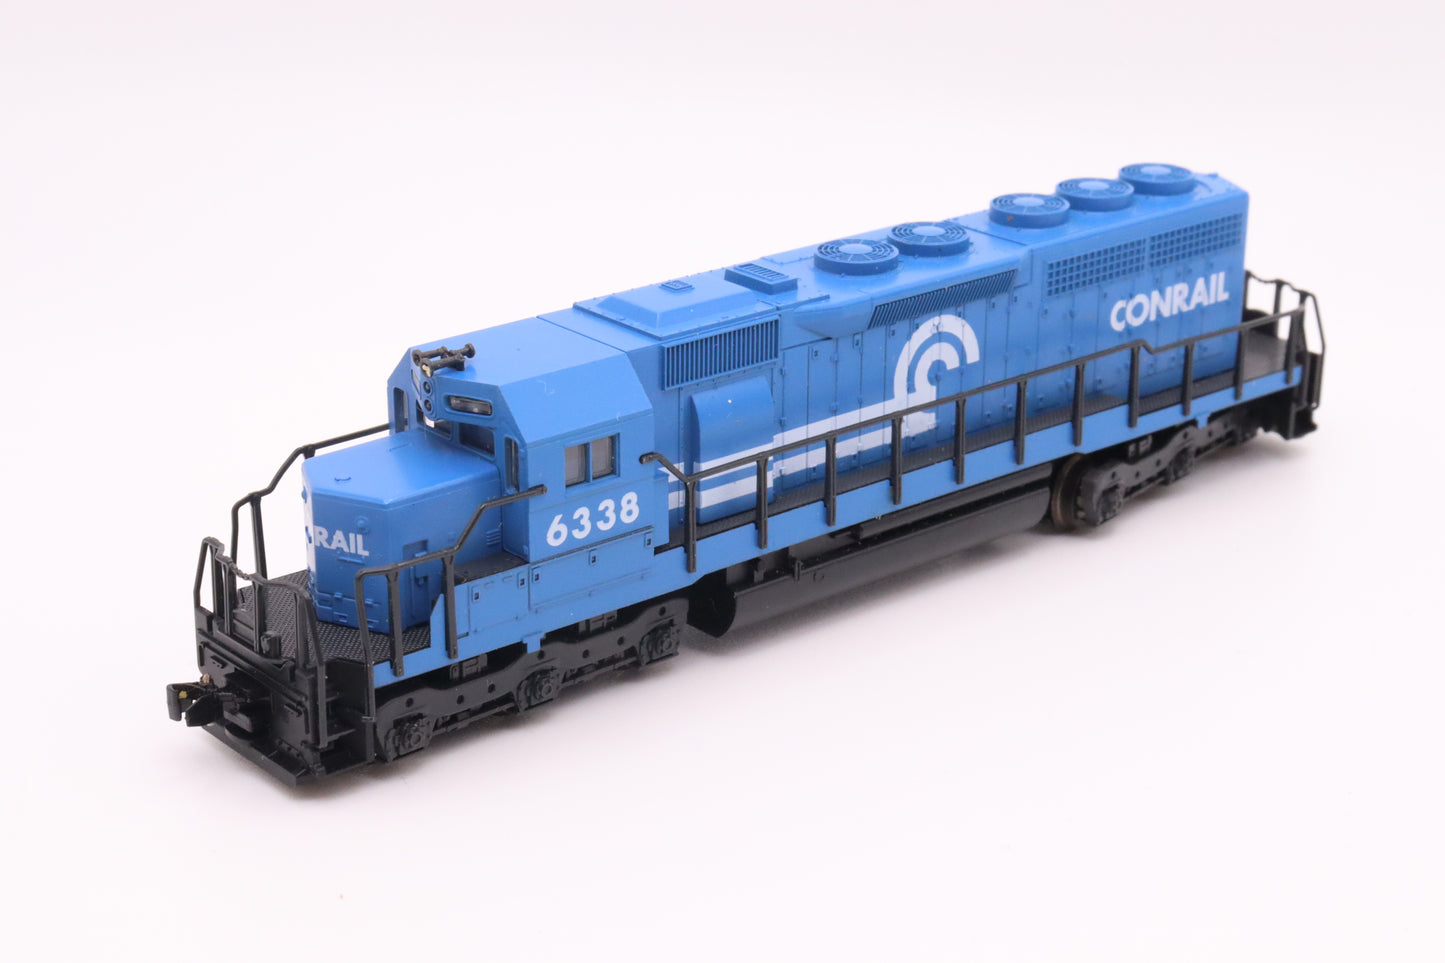 KAT-176-20R - SD-40 Locomotive - Conrail - CR #6338